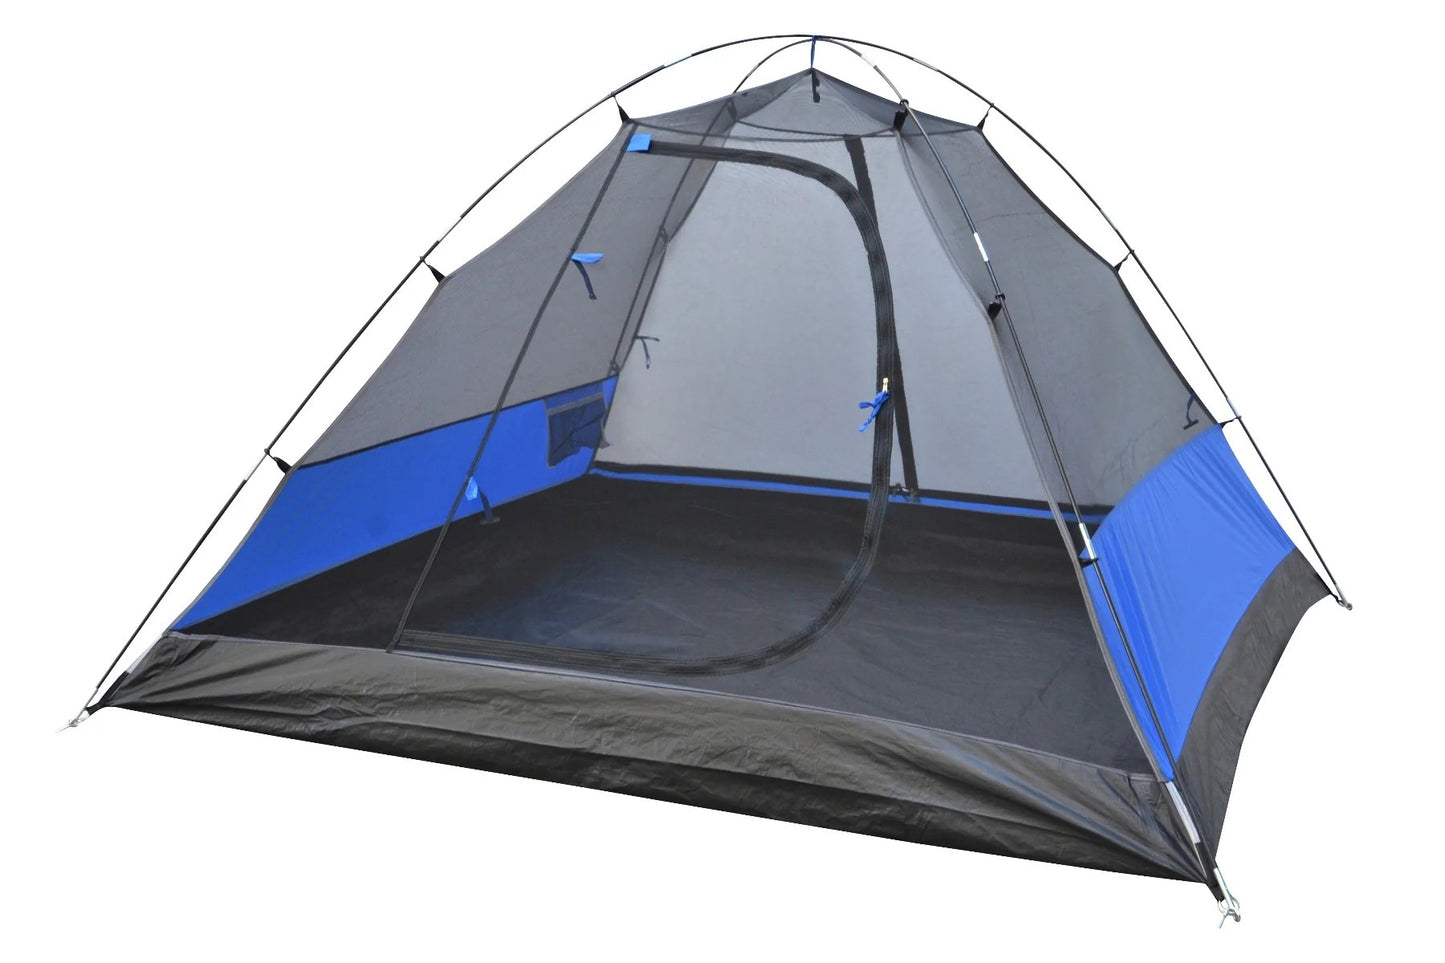 Tent Tanami 3 V Dome